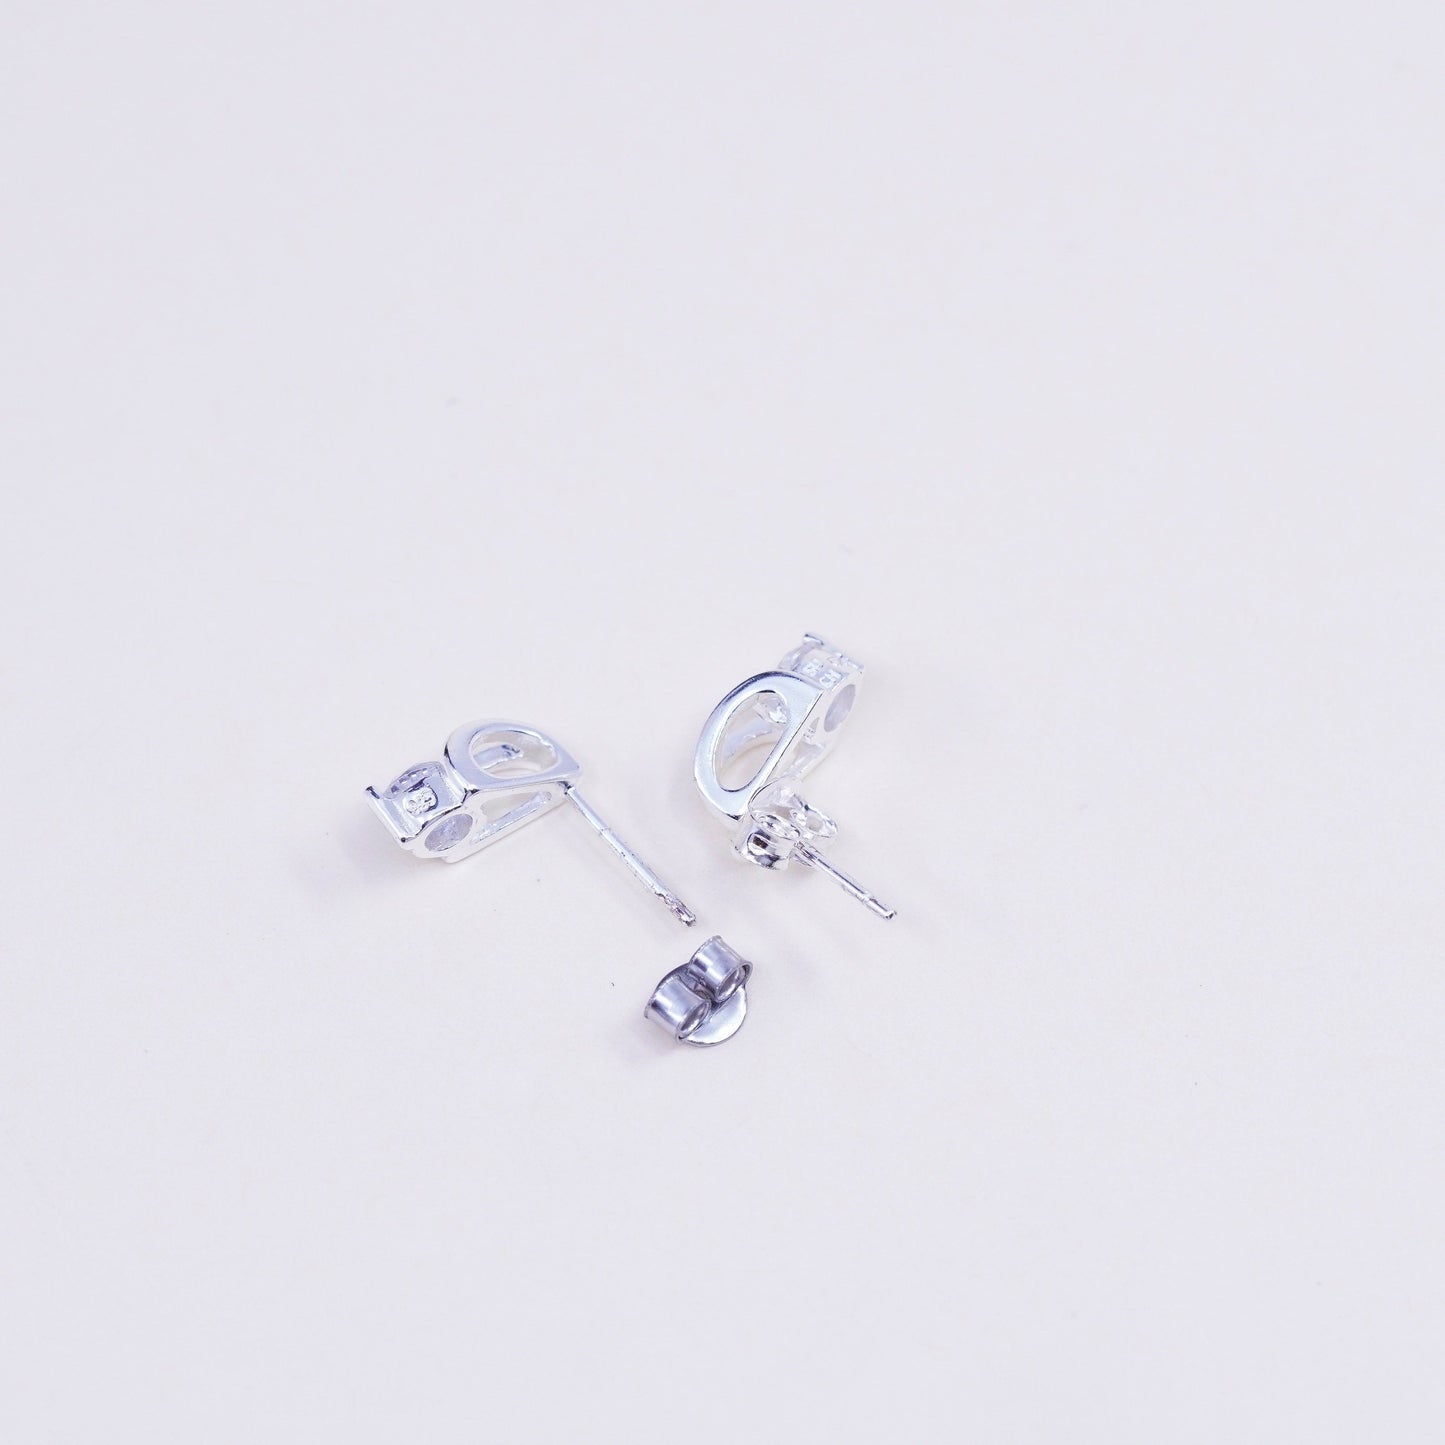 Vintage sterling silver genuine cz studs, fashion minimalist earrings